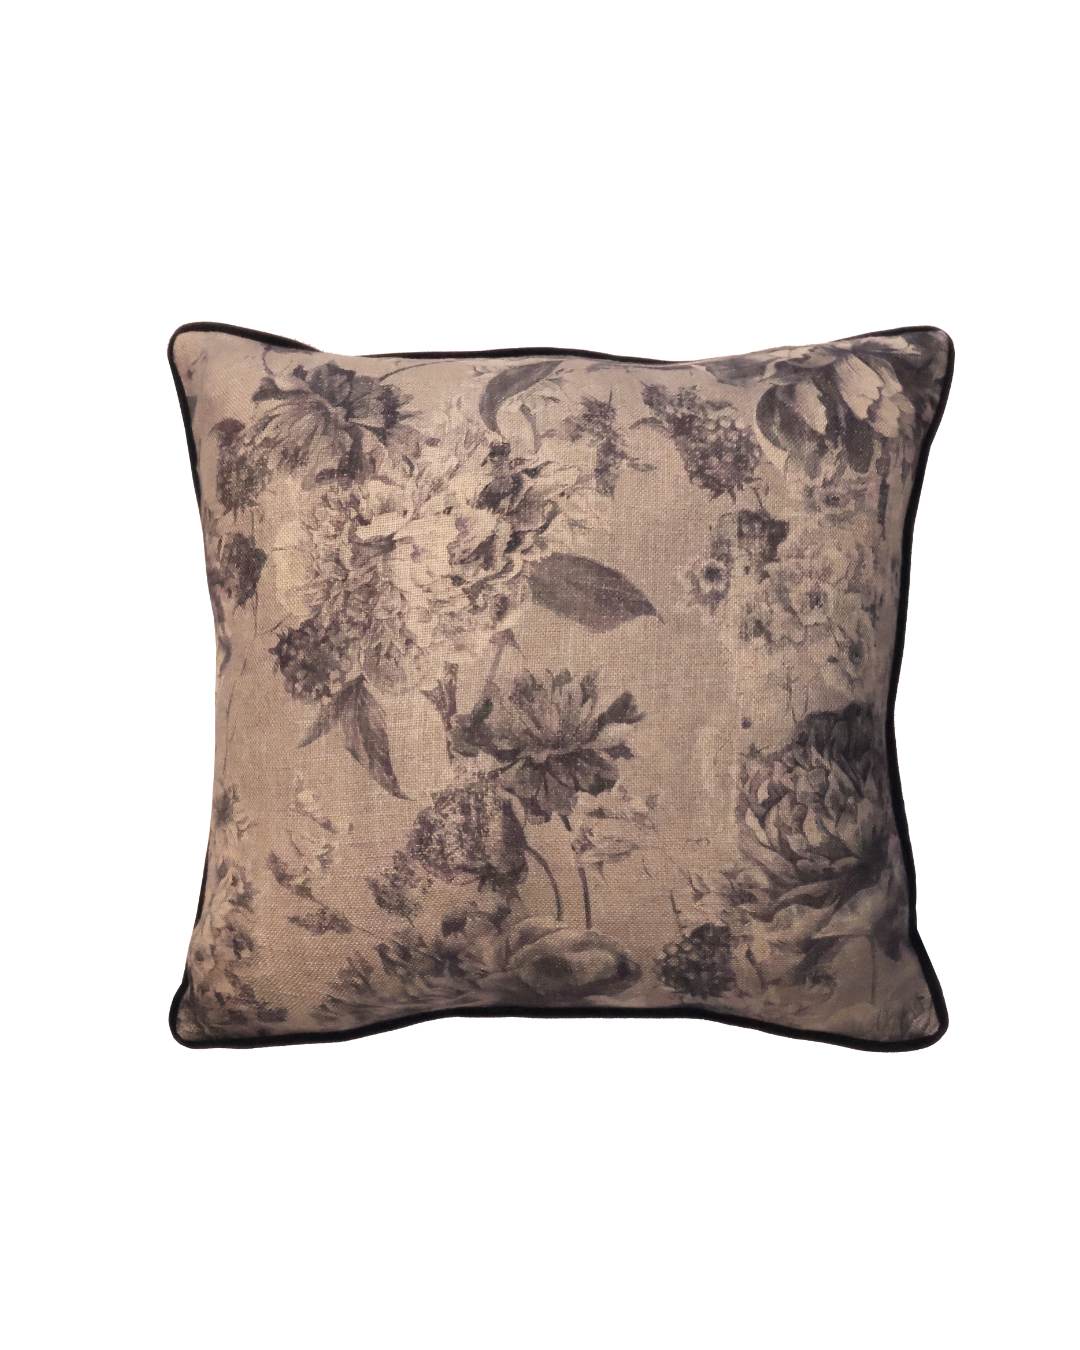 Lauren navy floral cushion